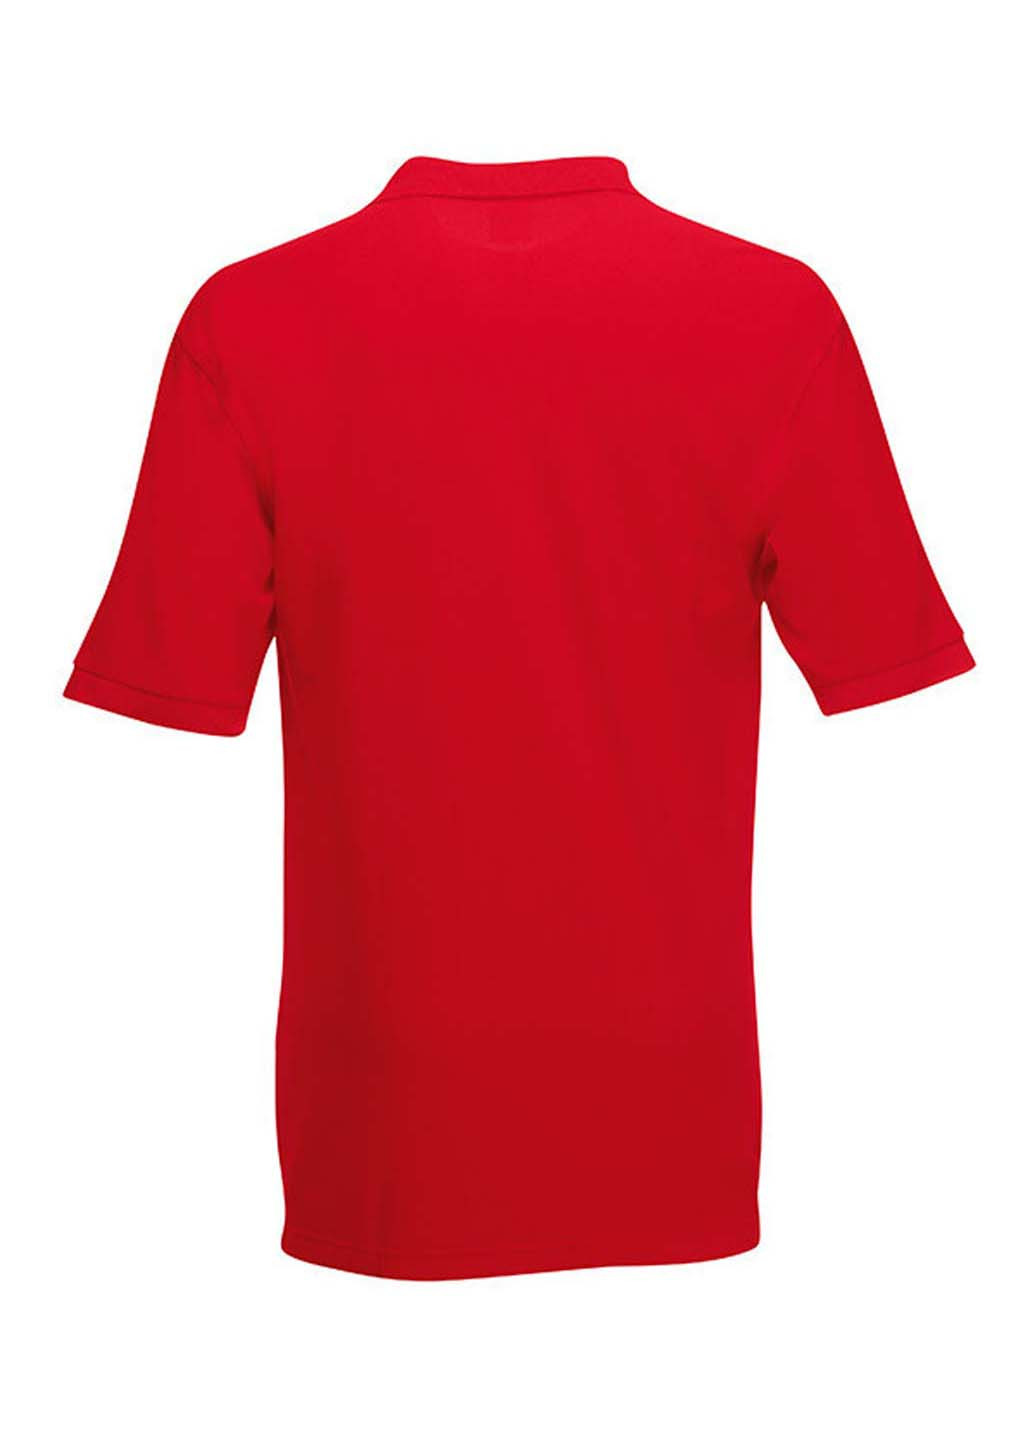 Красная футболка-поло для мужчин Fruit of the Loom